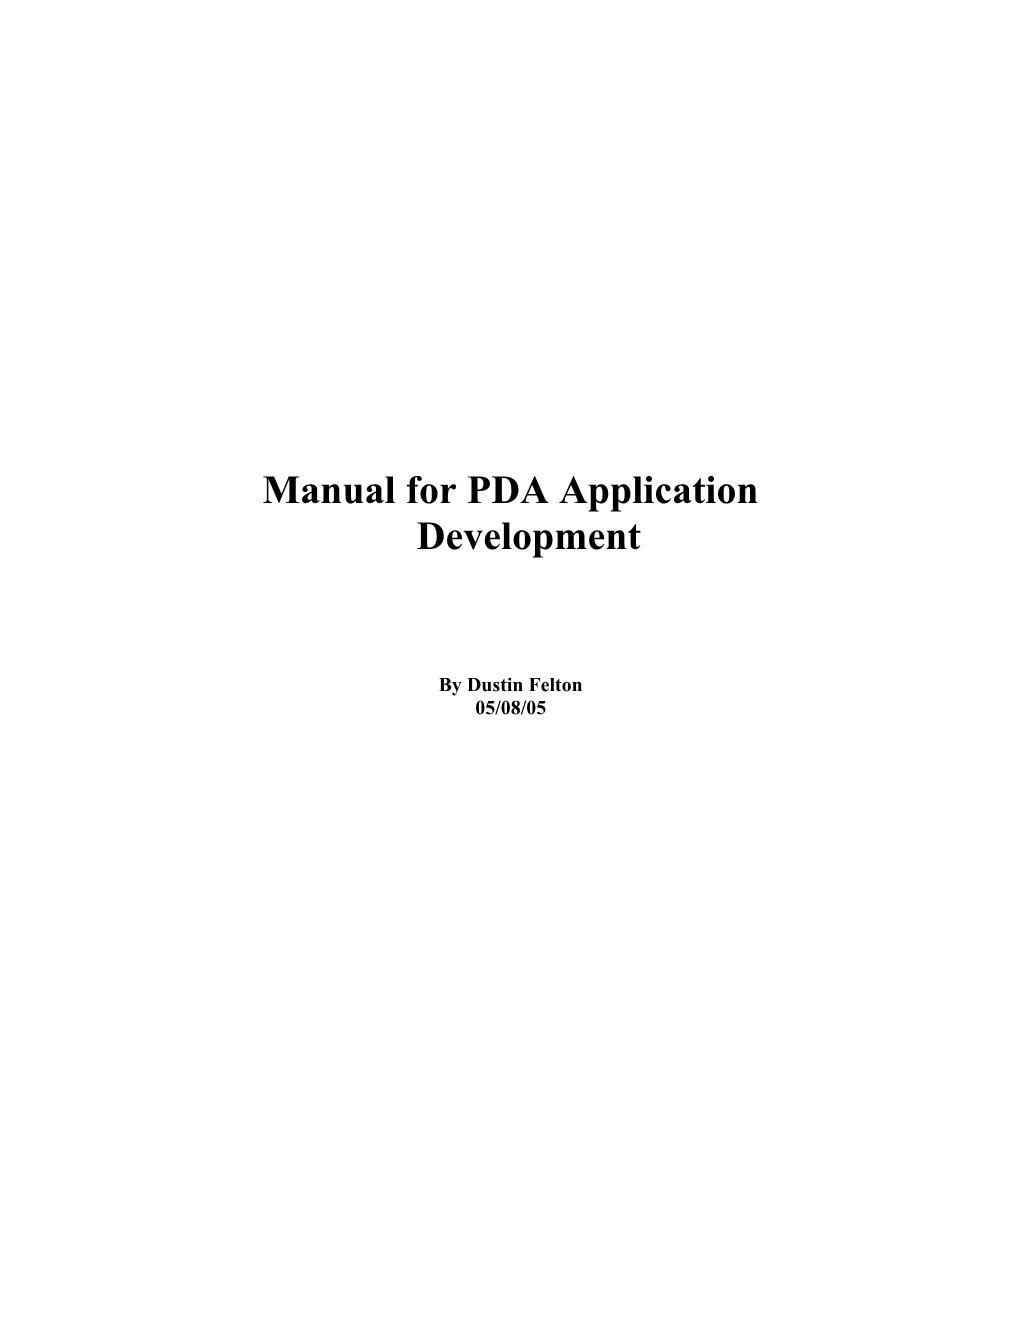 Manual for PDA Application Development